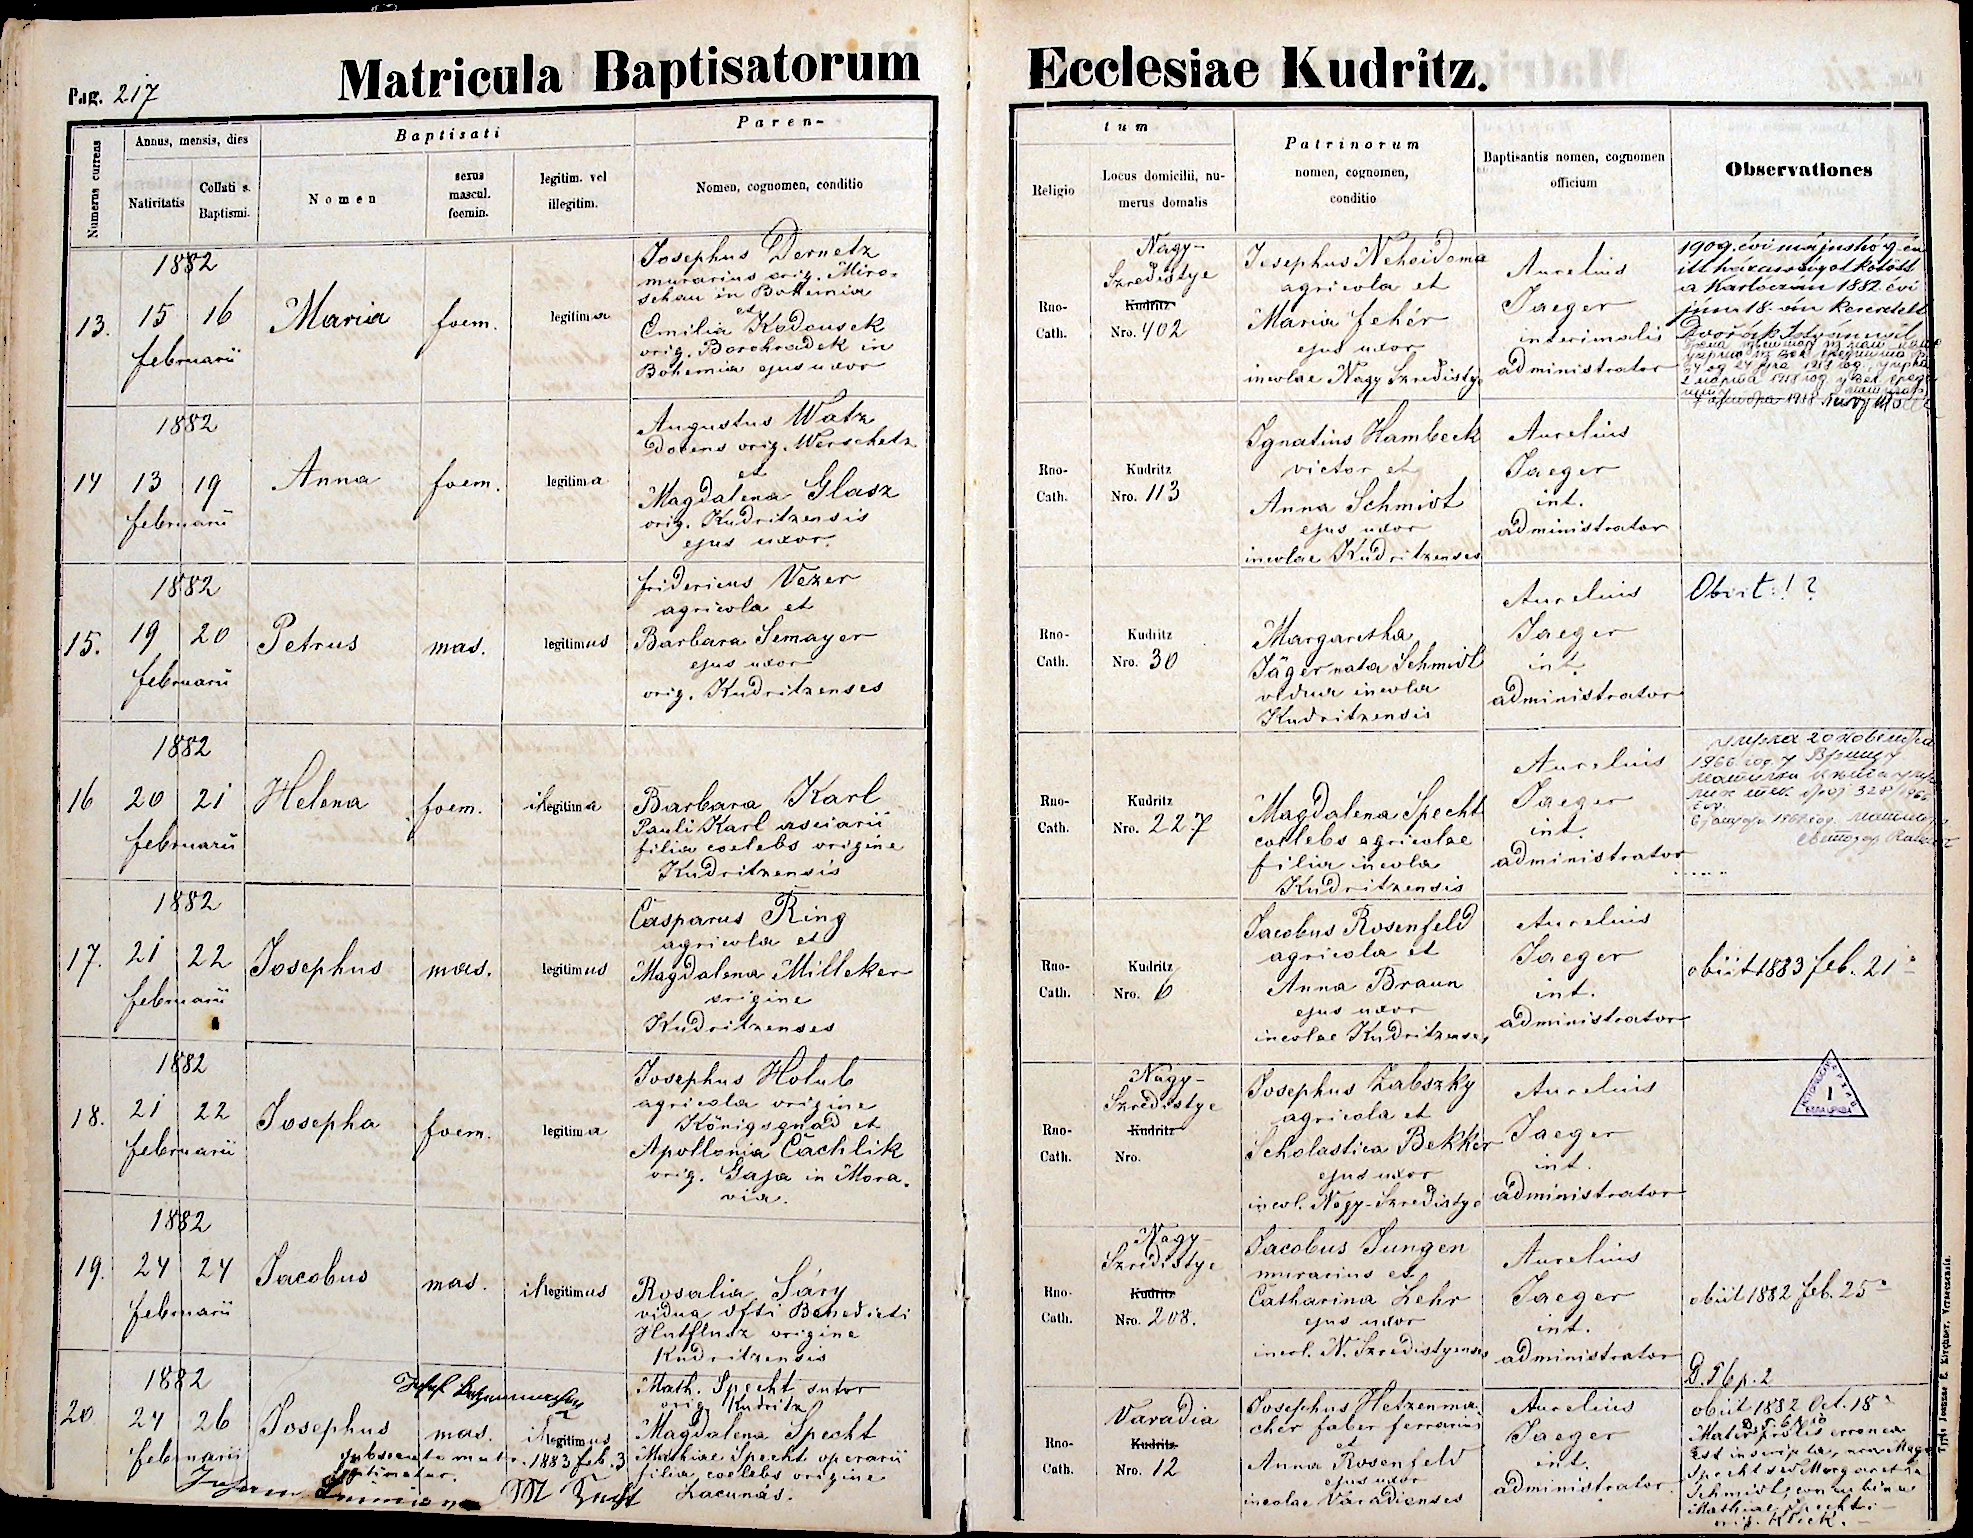 images/church_records/BIRTHS/1880-1883B/1882/217